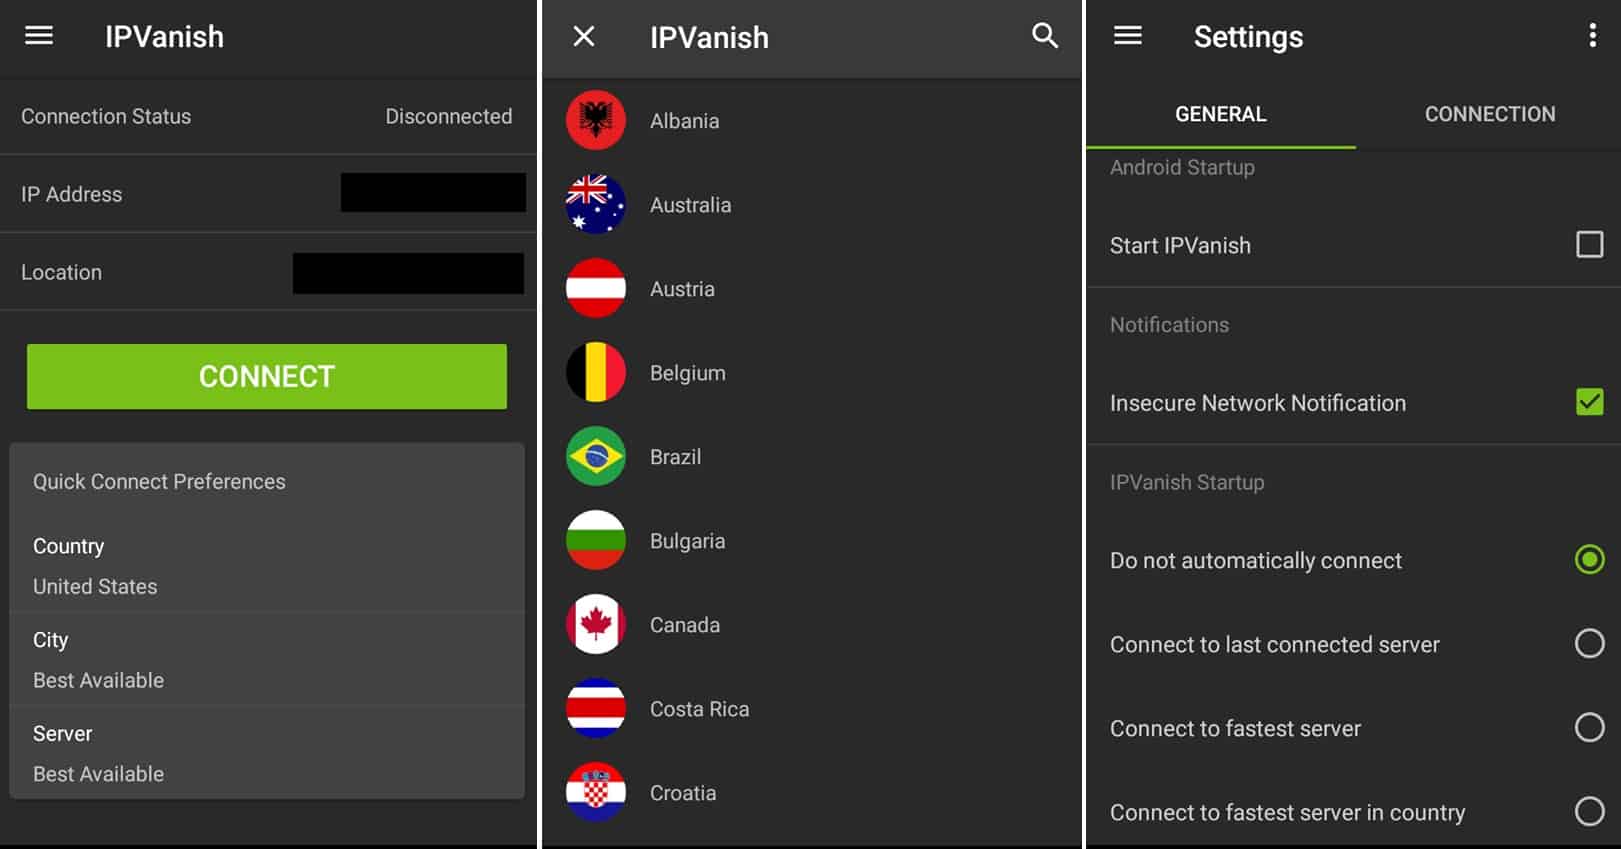 IPVanish Mobile APplication